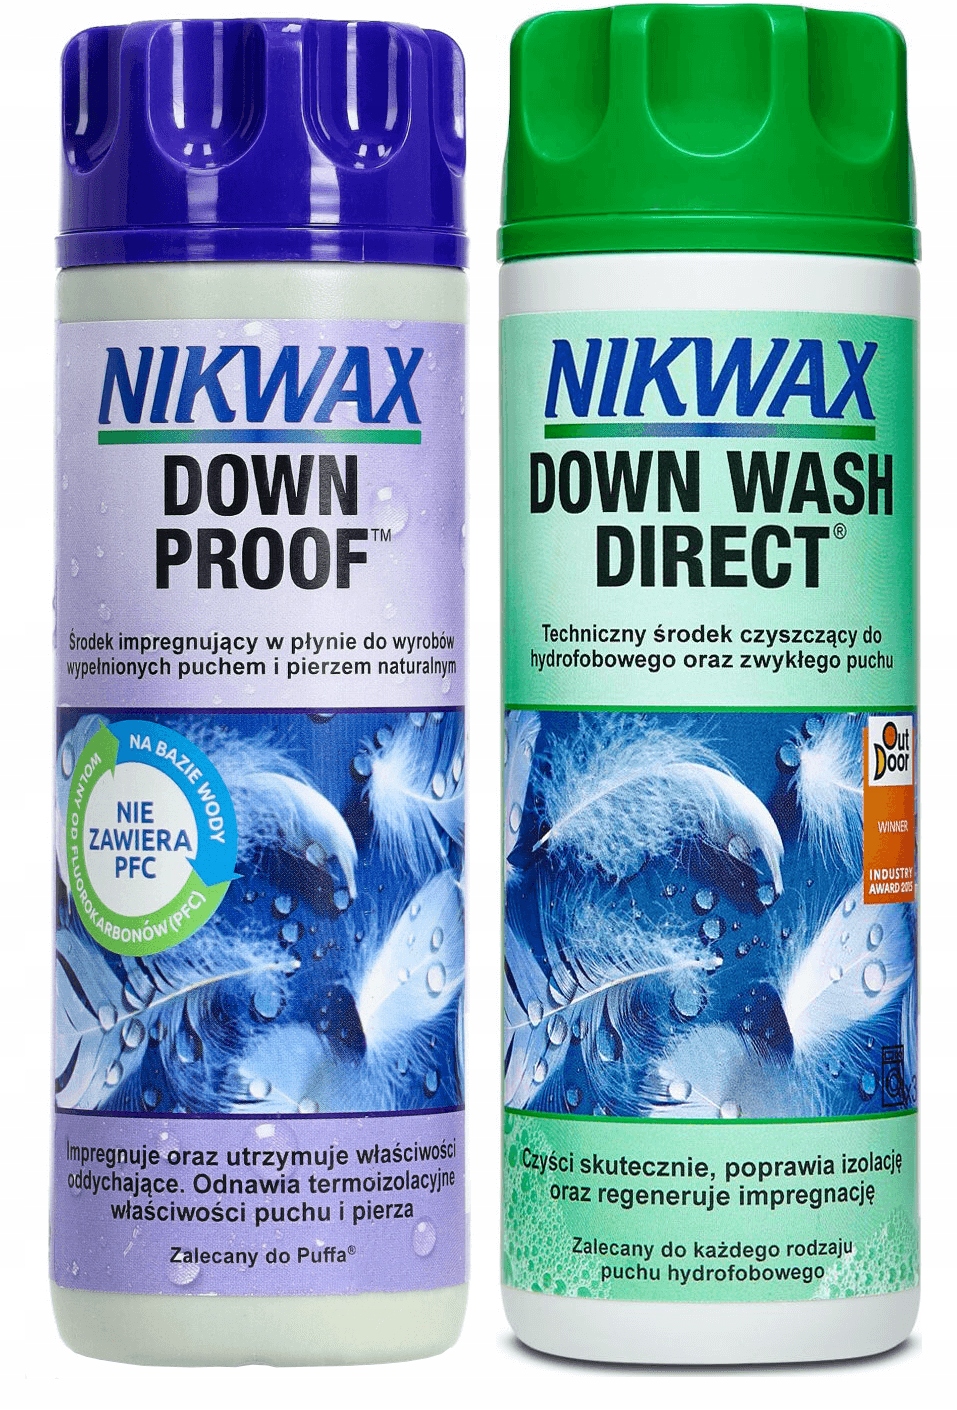 Nikwax® Down Wash Direct (100ml/1 wash)